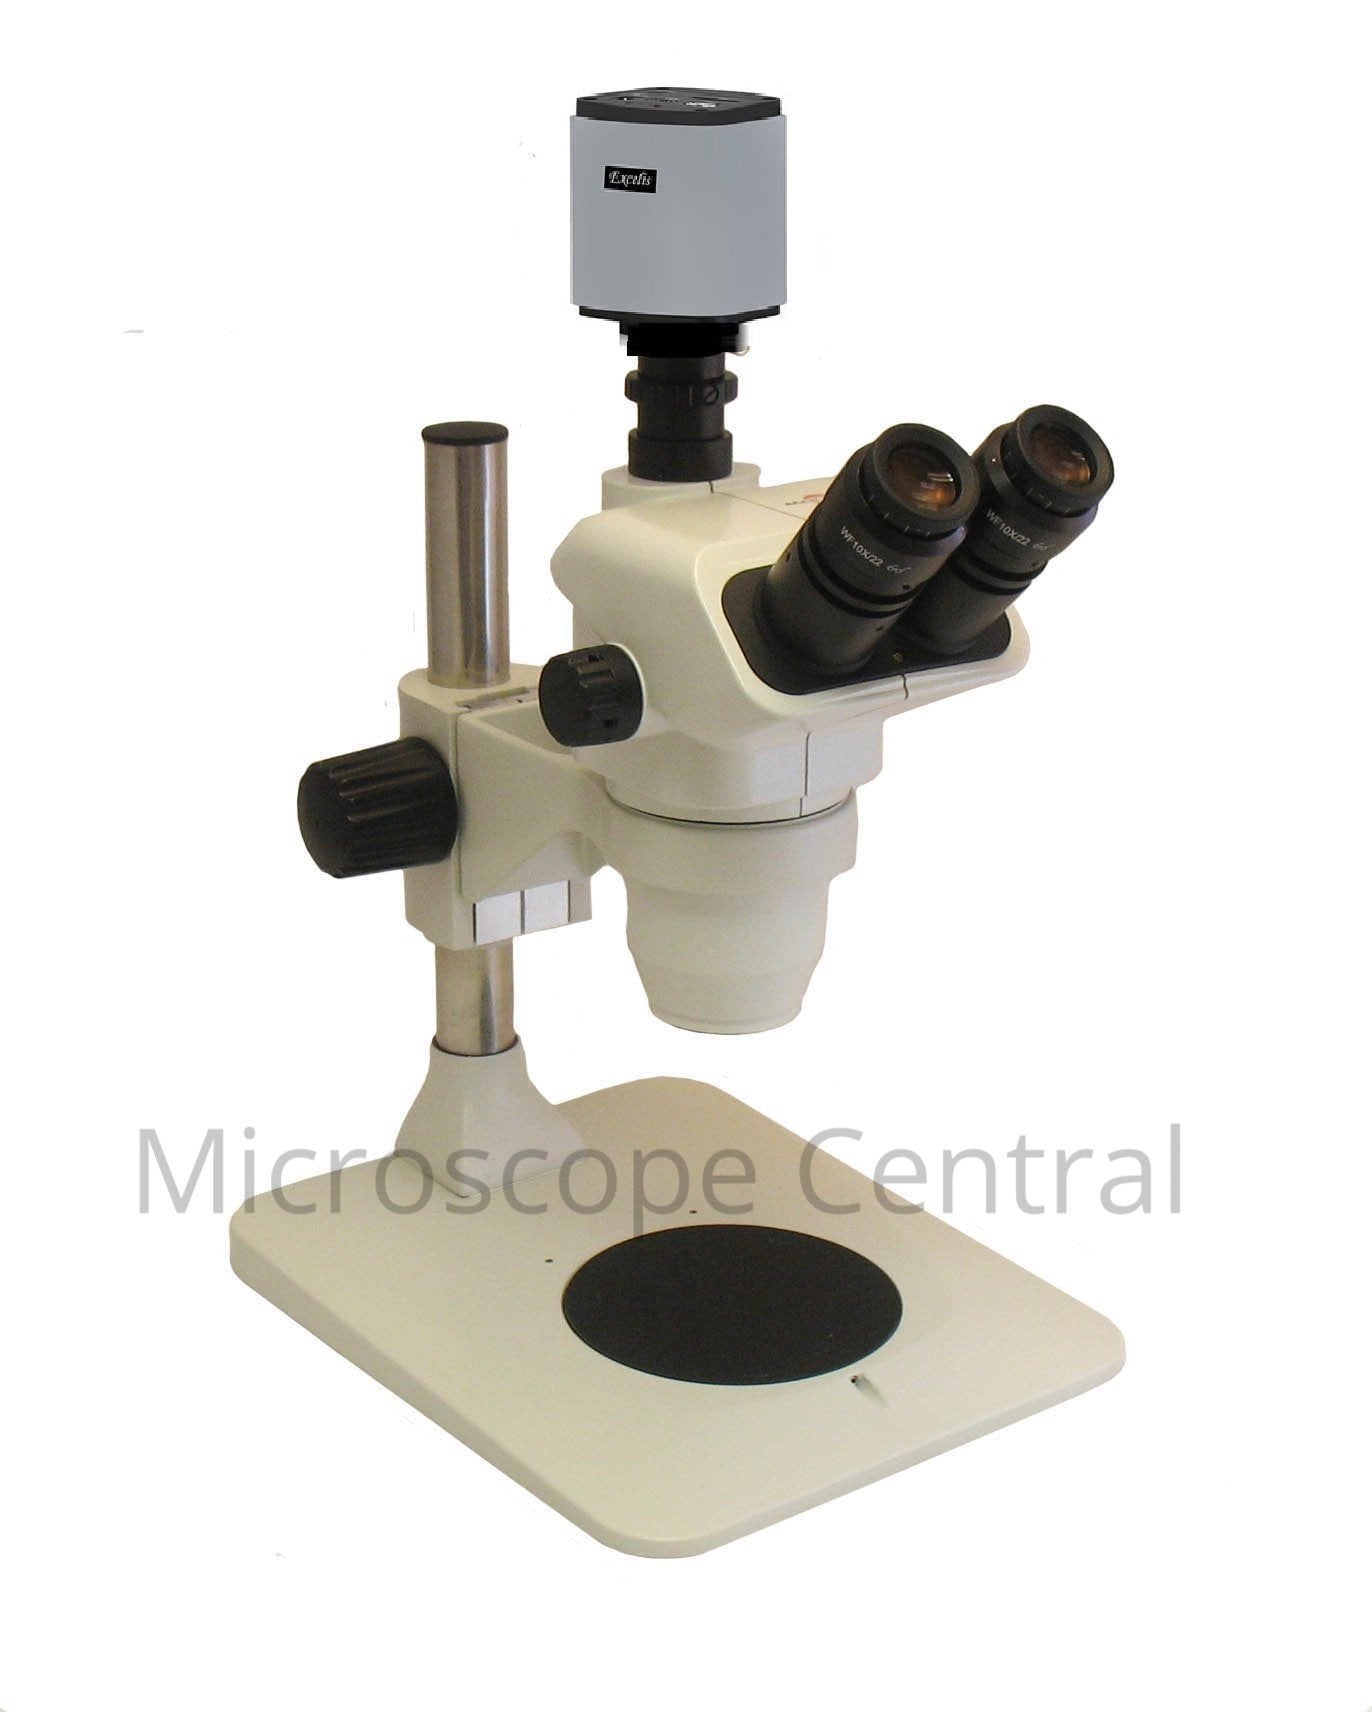 Accu-Scope 3076 Pole Stand Digital Stereo Microscope 0.67x - 4.5x